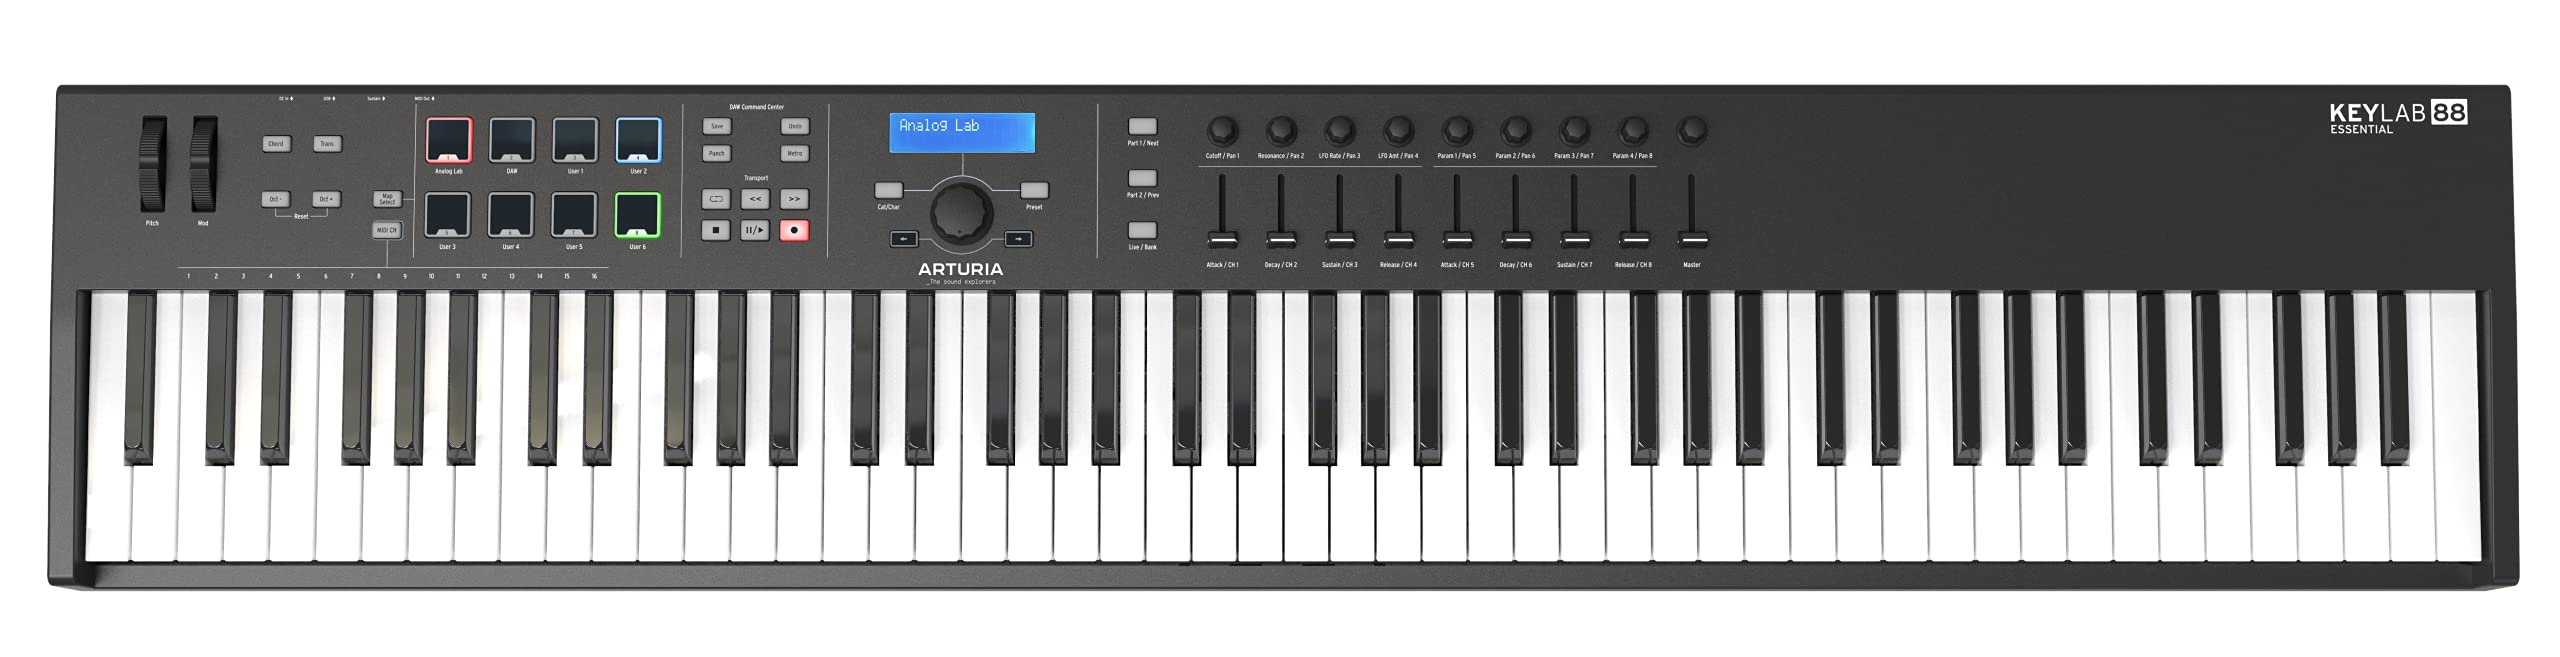 Arturia KeyLab Essential 88 - 88 键半配重 USB MIDI 键盘控制器...